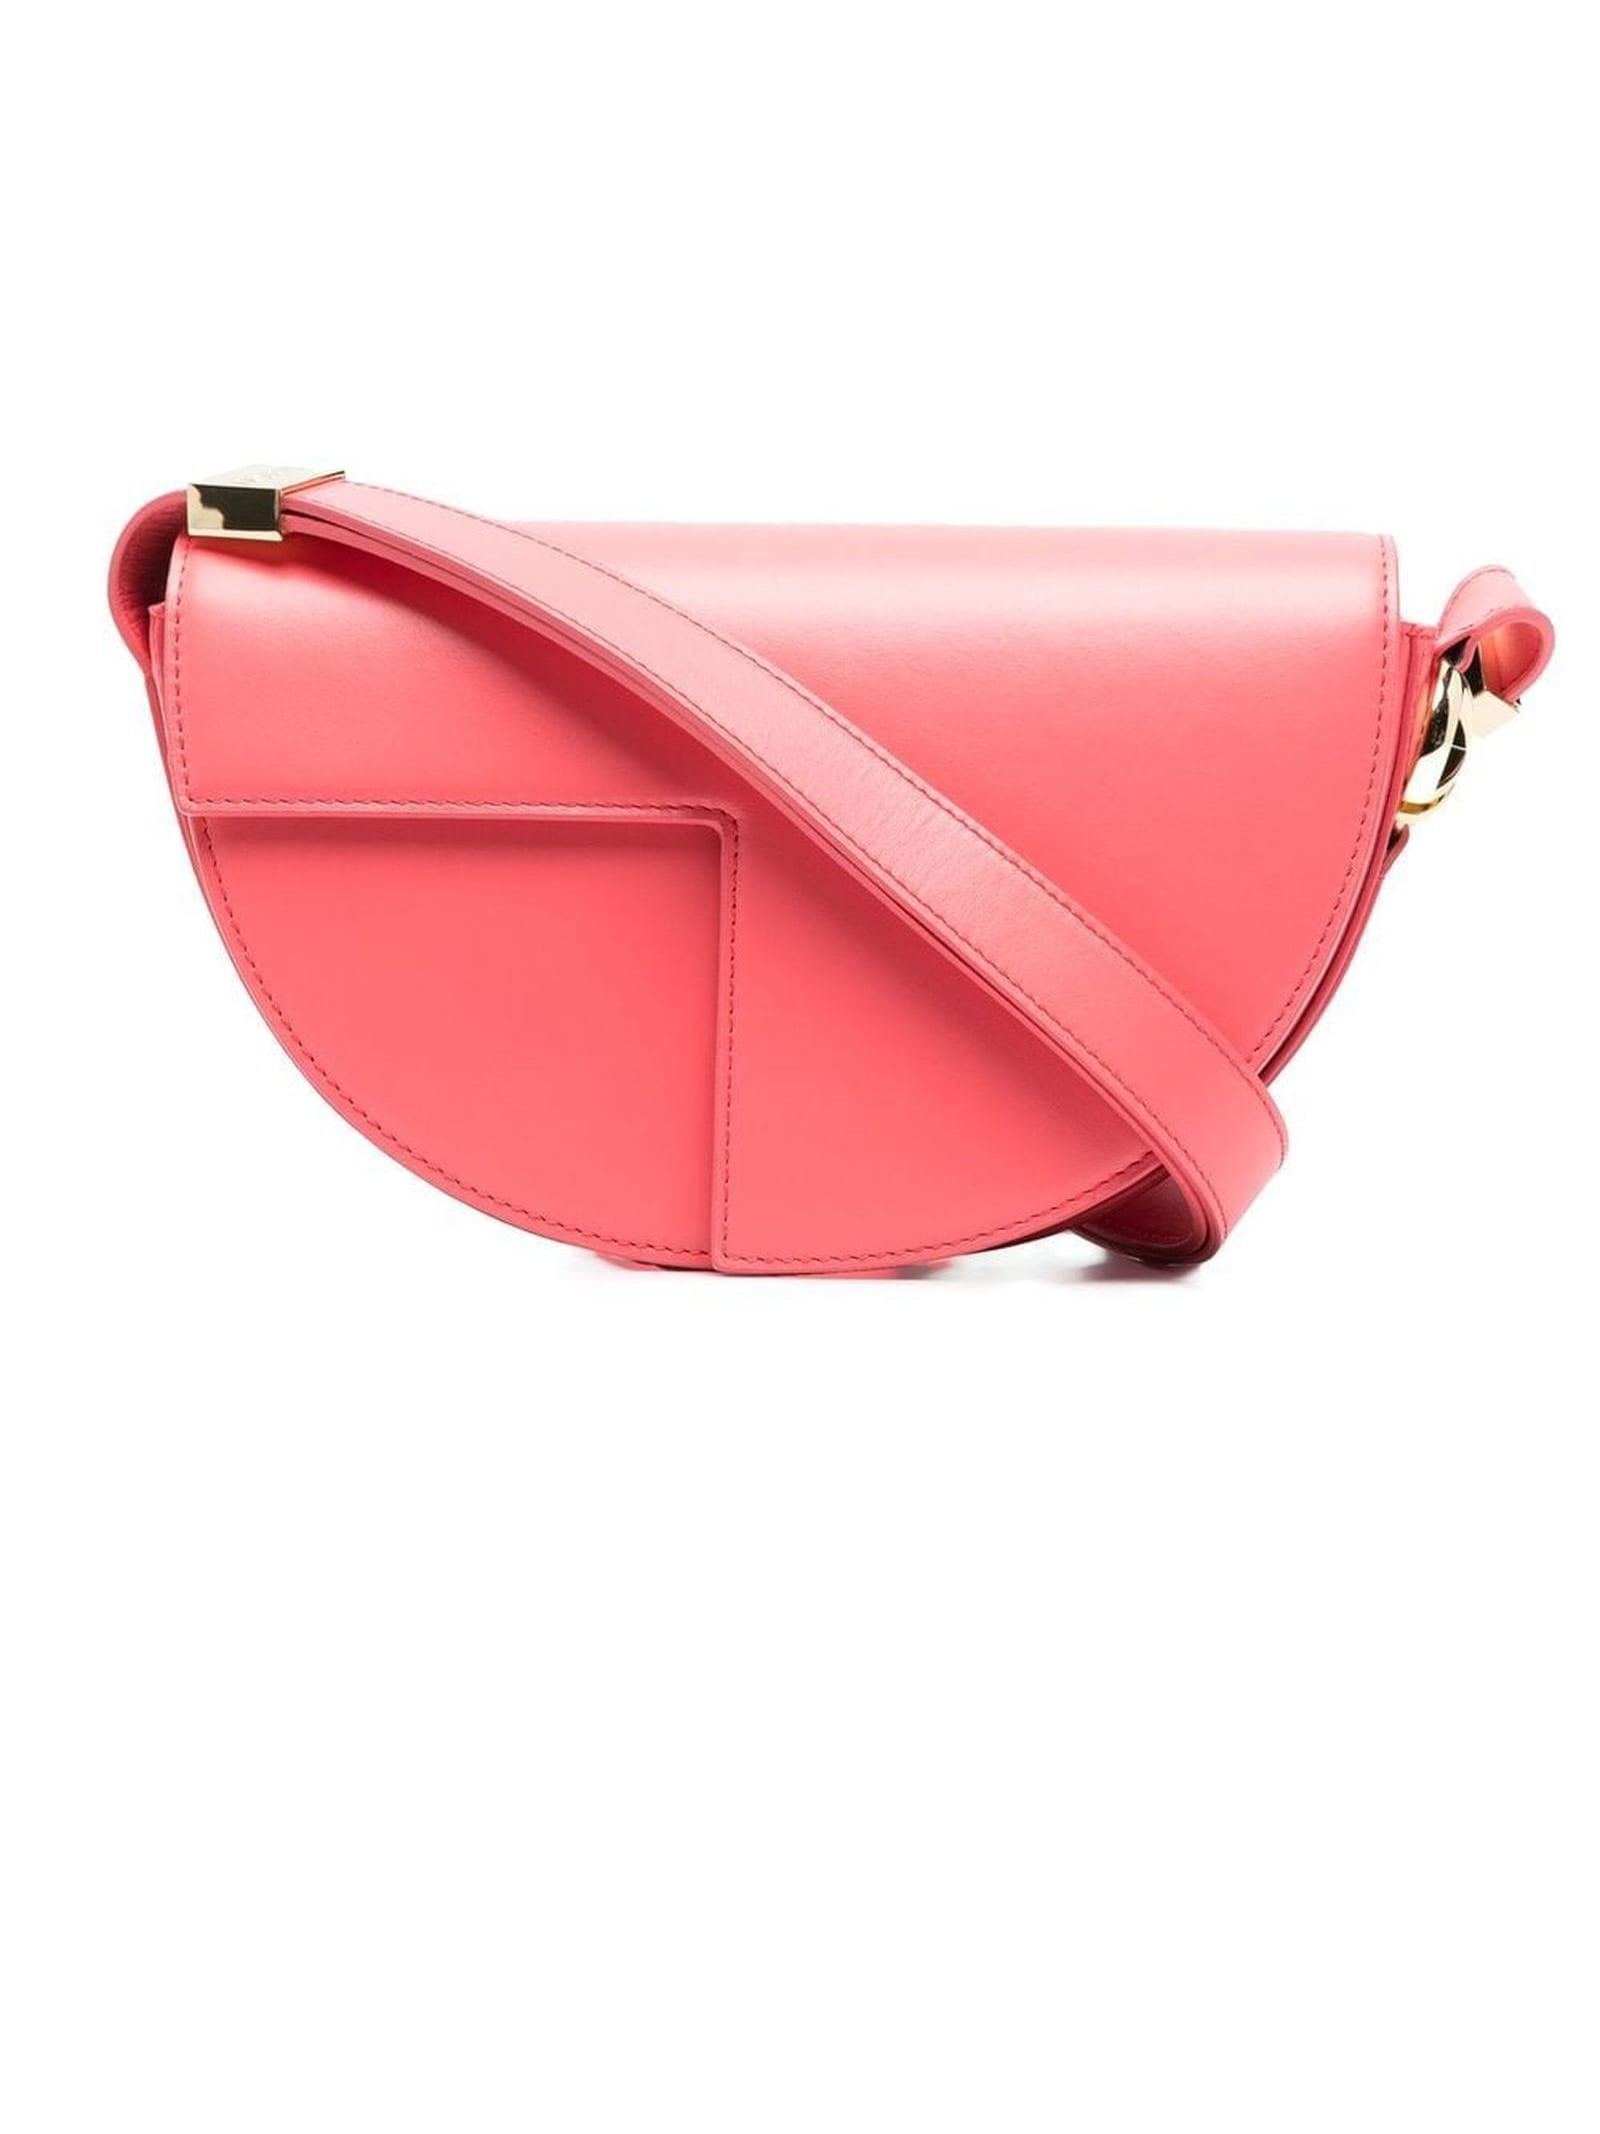 Shop Patou Confetti Pink Leather Handbag